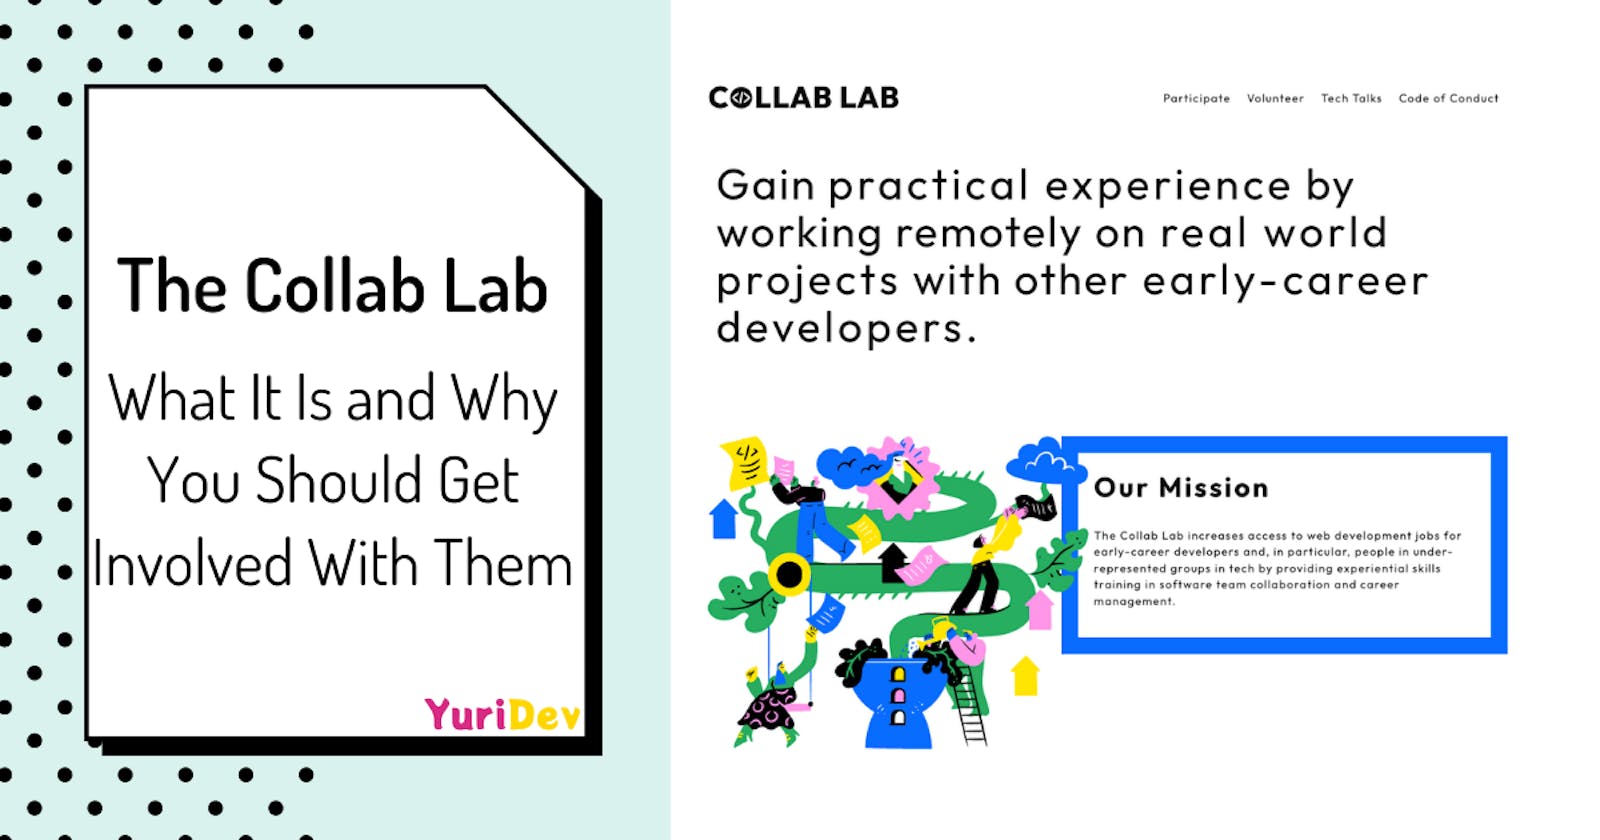 The Collab Lab